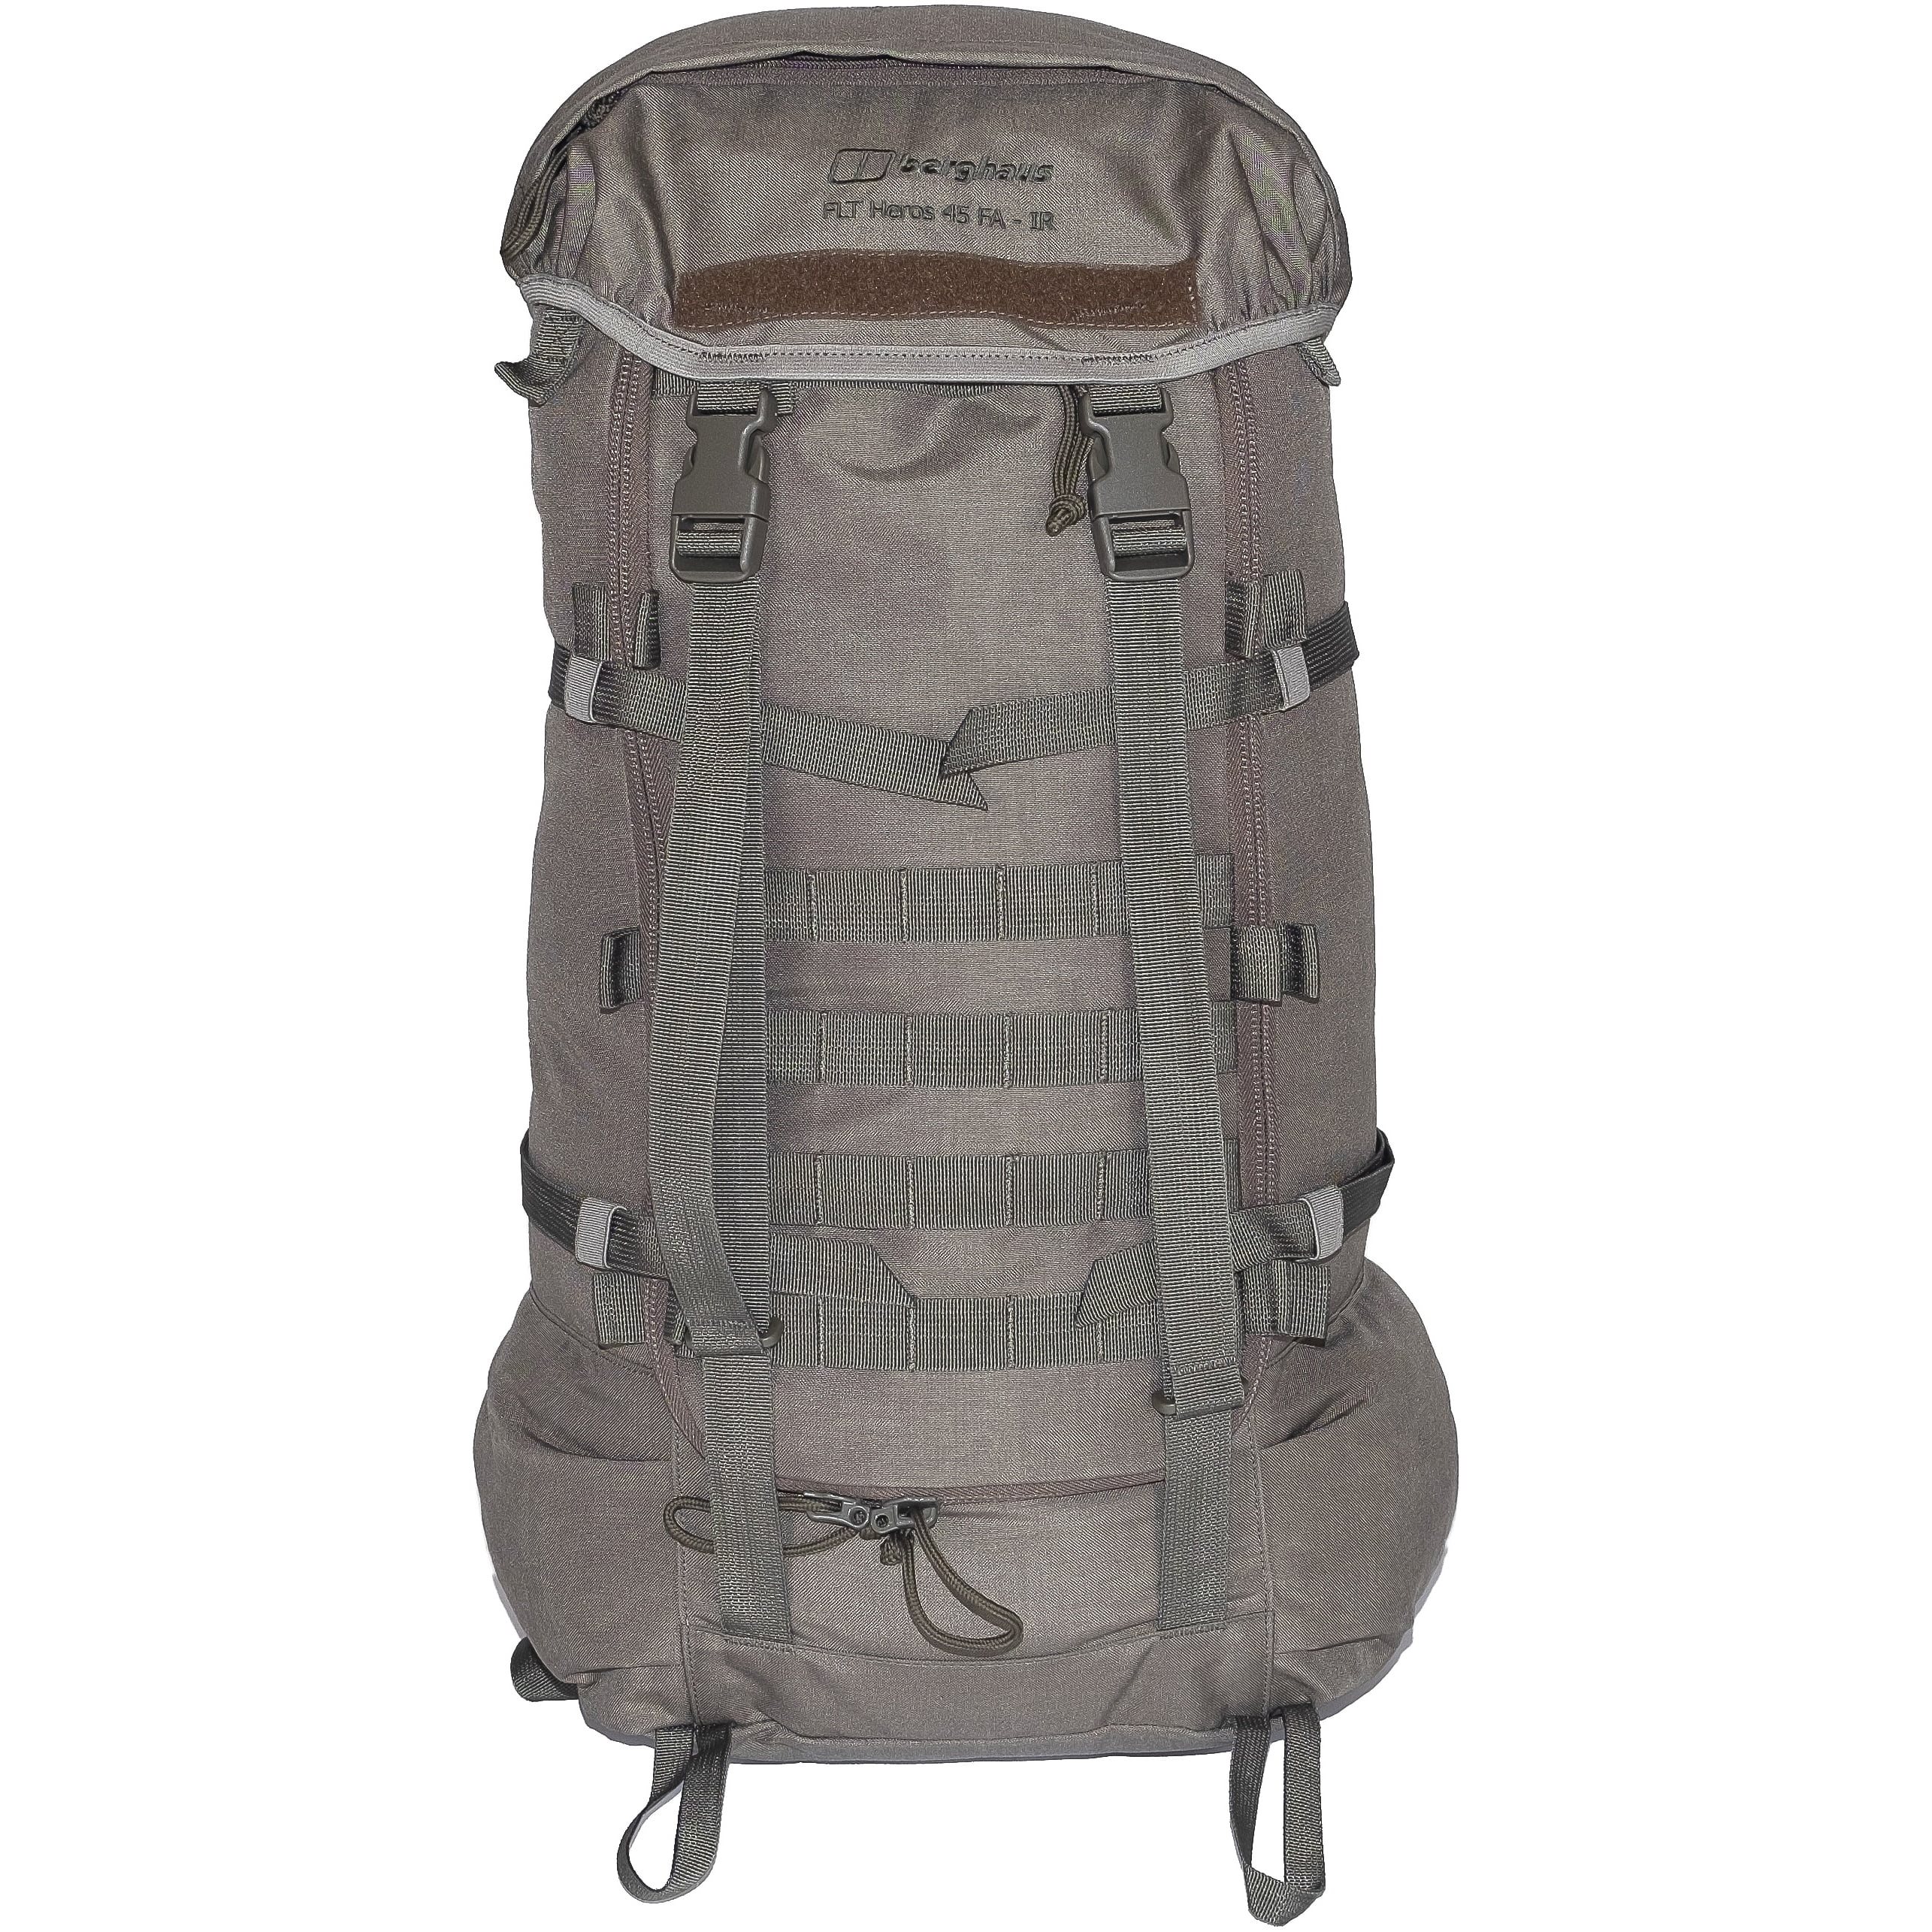 Backpack FLT HEROS 45 FA IR STONE GREY OLIVE Berghaus LV00140SGO L-11